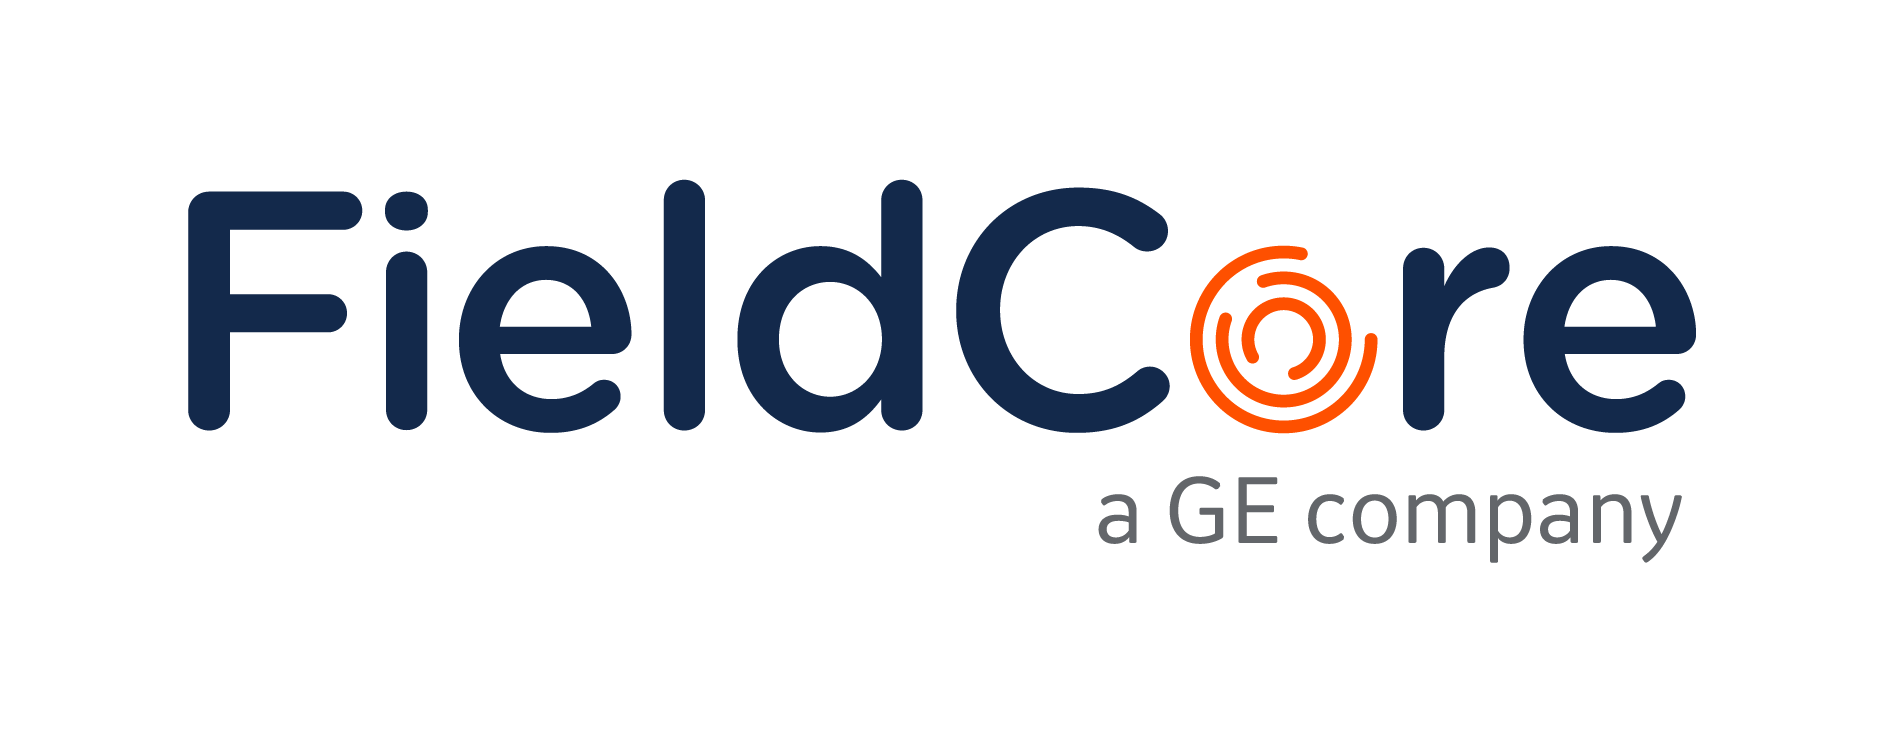 GE Company Logo - FieldCore - A GE Company | Field Service Solutions, Field Engineering